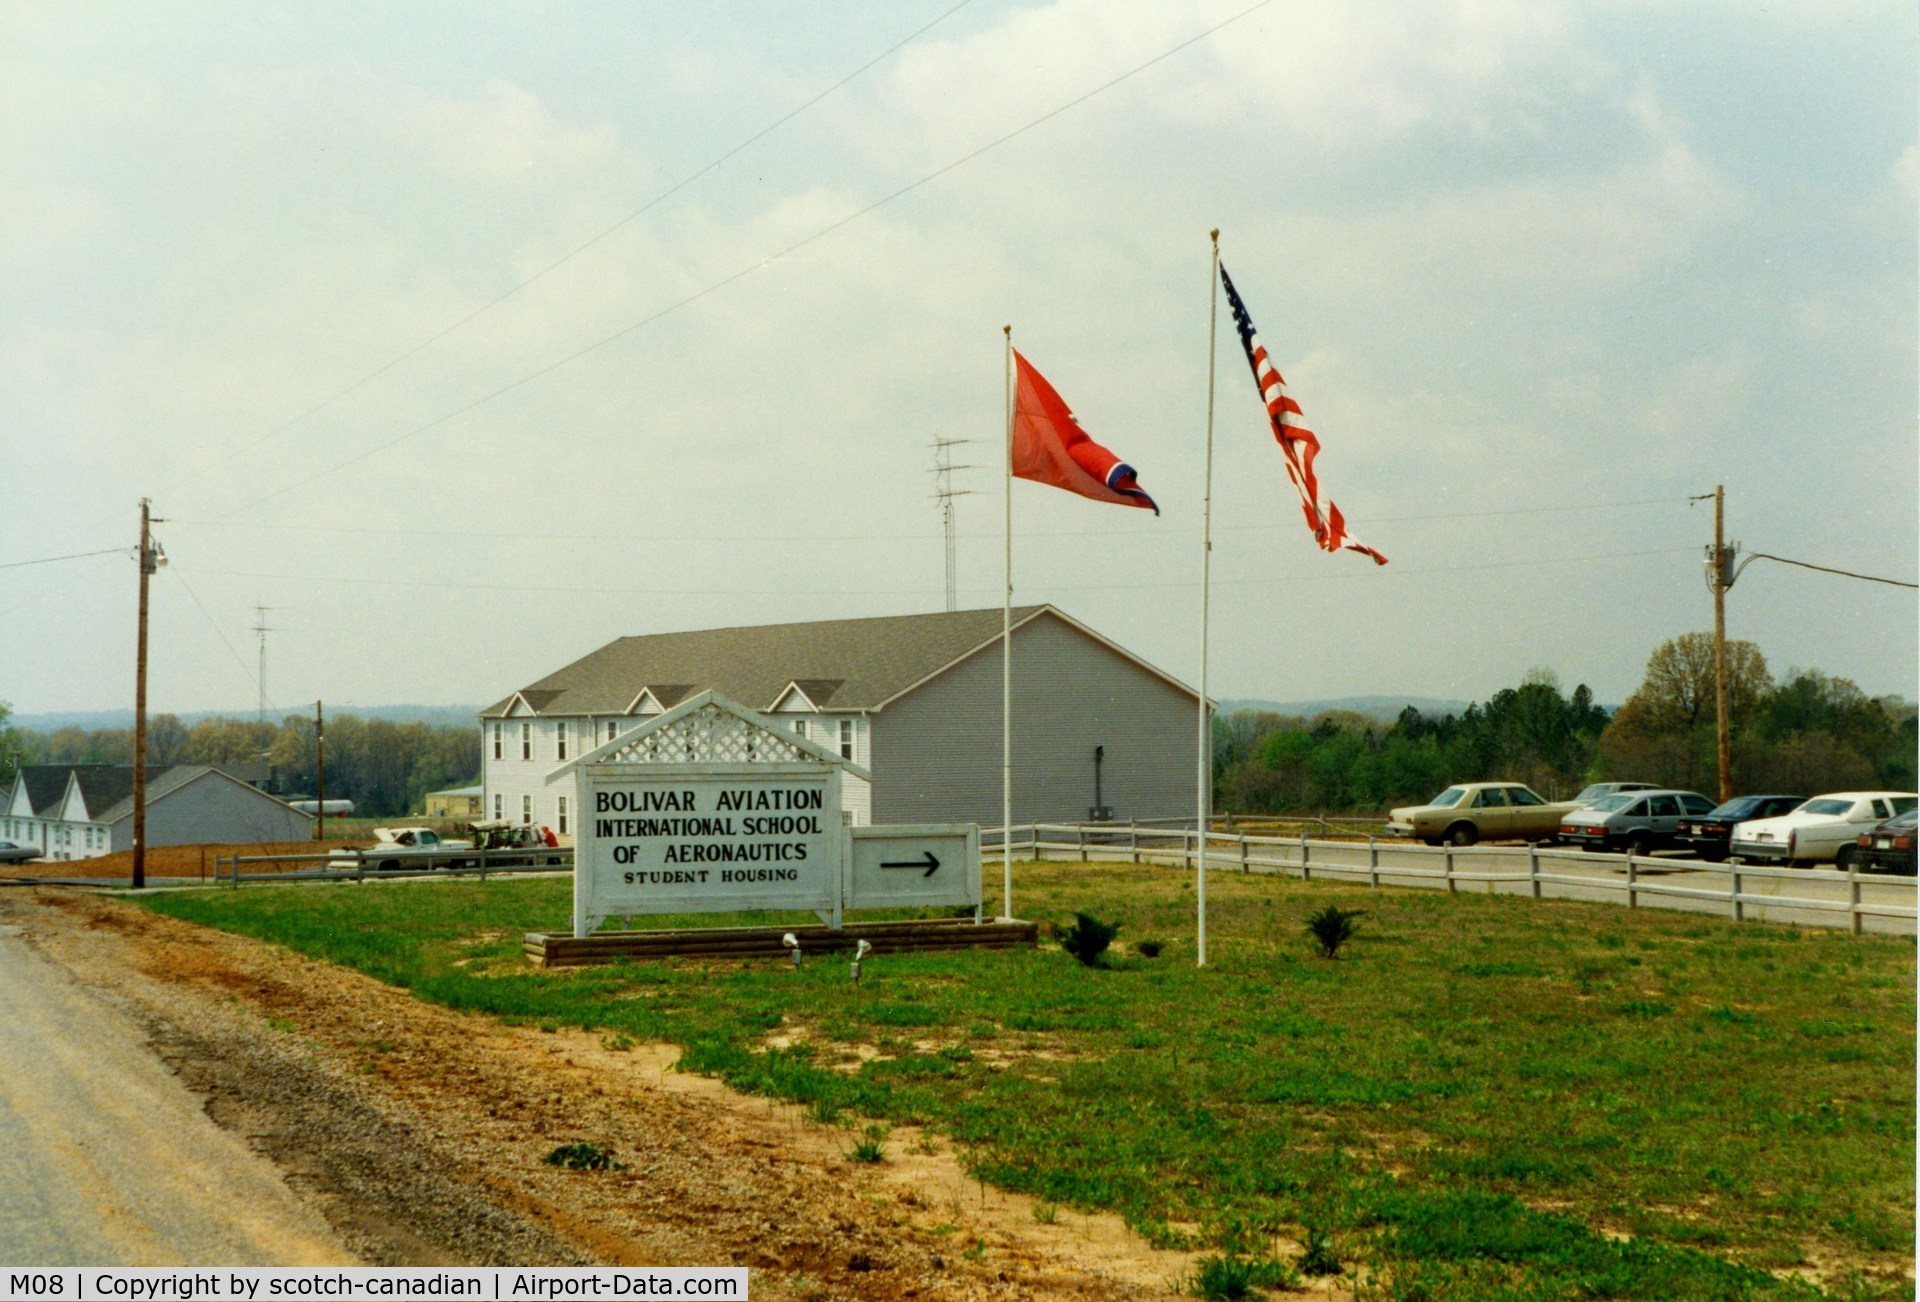 William L. Whitehurst Field Airport (M08) - Student Housing at Bolivar International School of Aeronautics, William L. Whitehurst Field, Bolivar, TN - April 1989